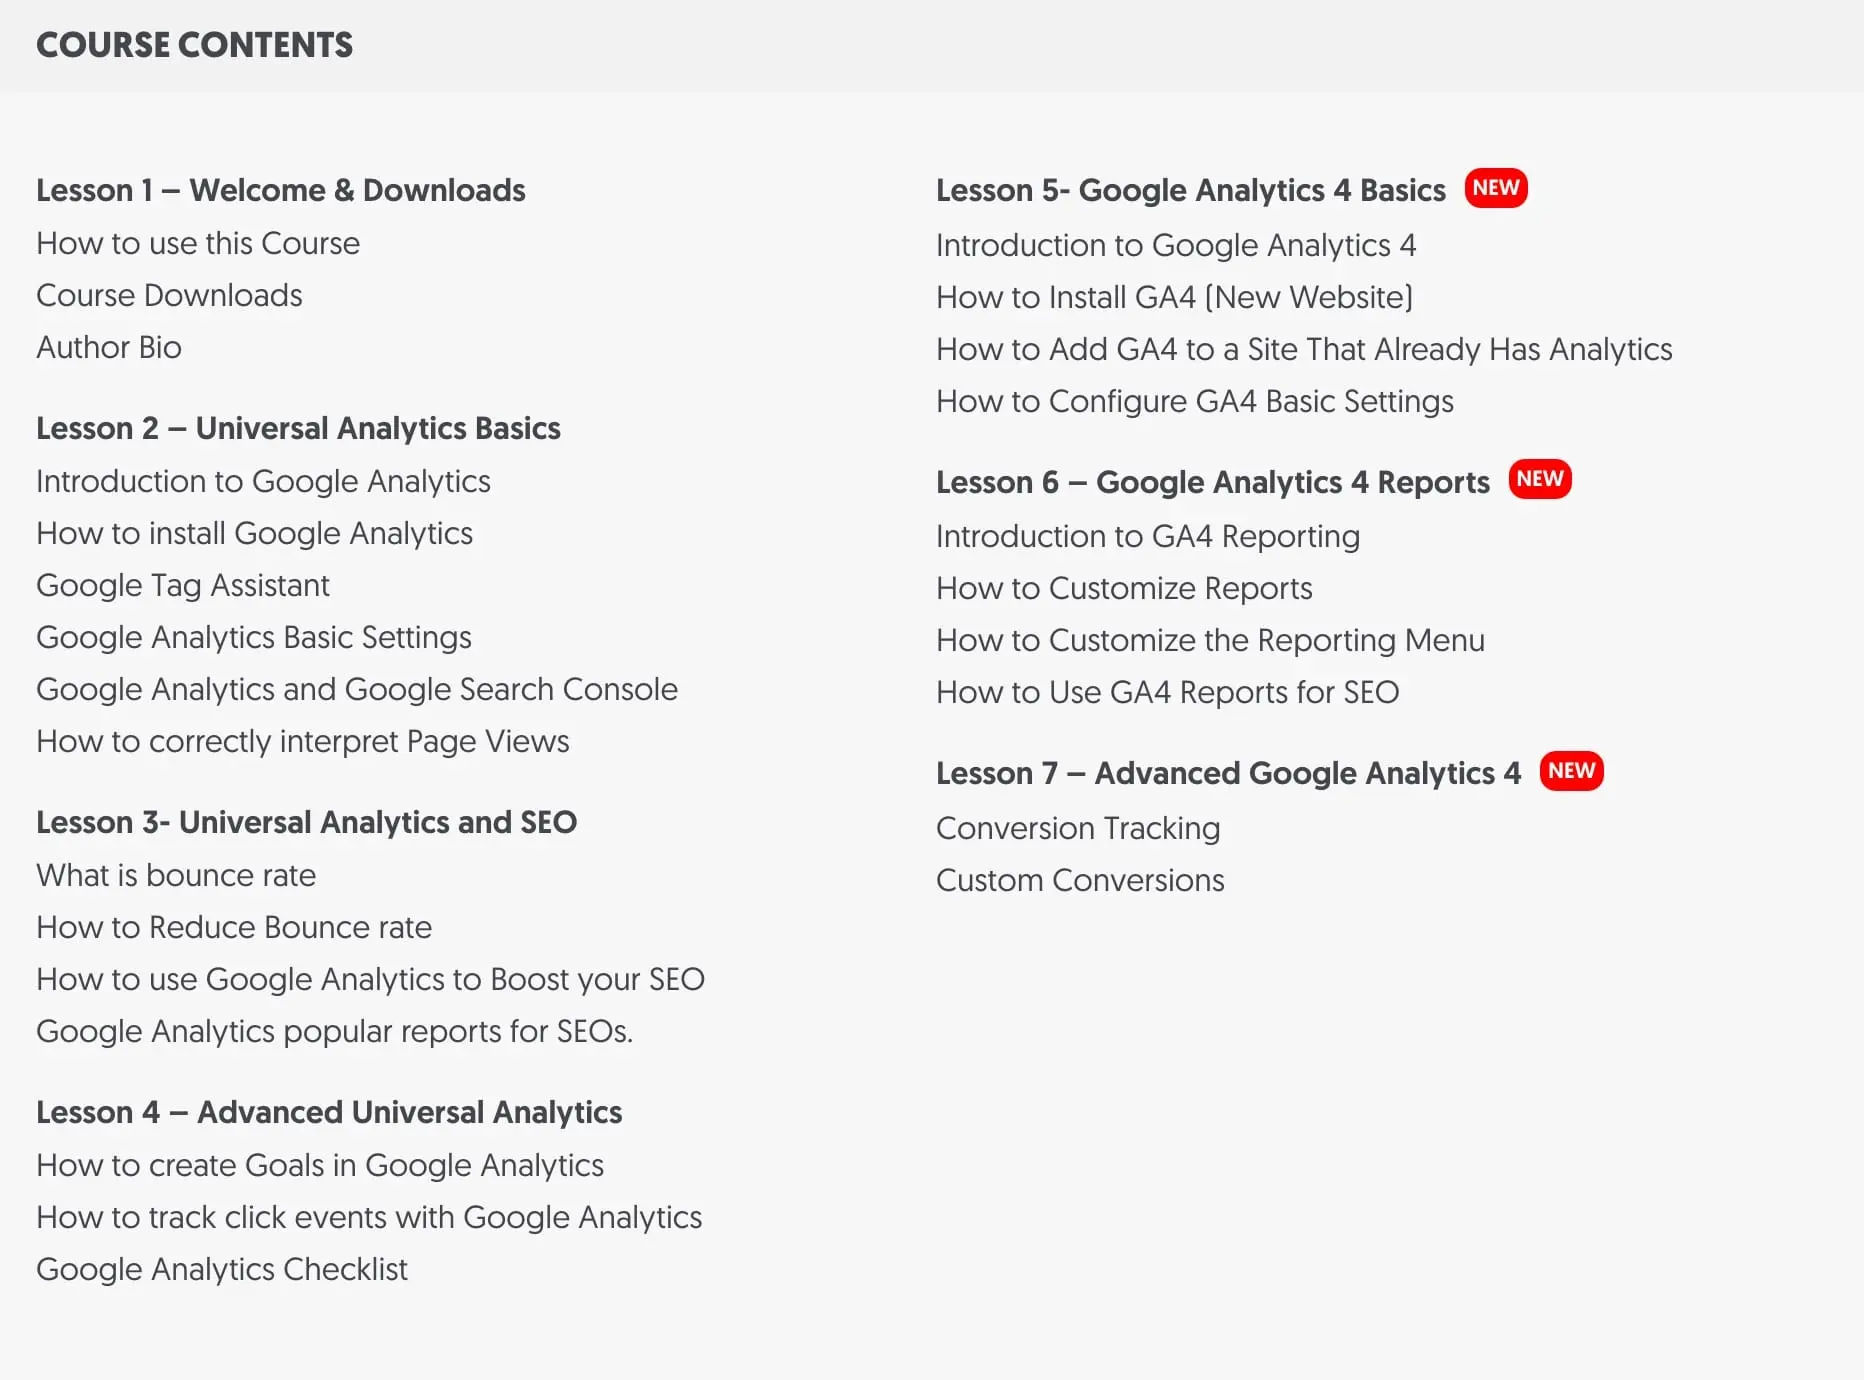 Google Analytics Course Contents.